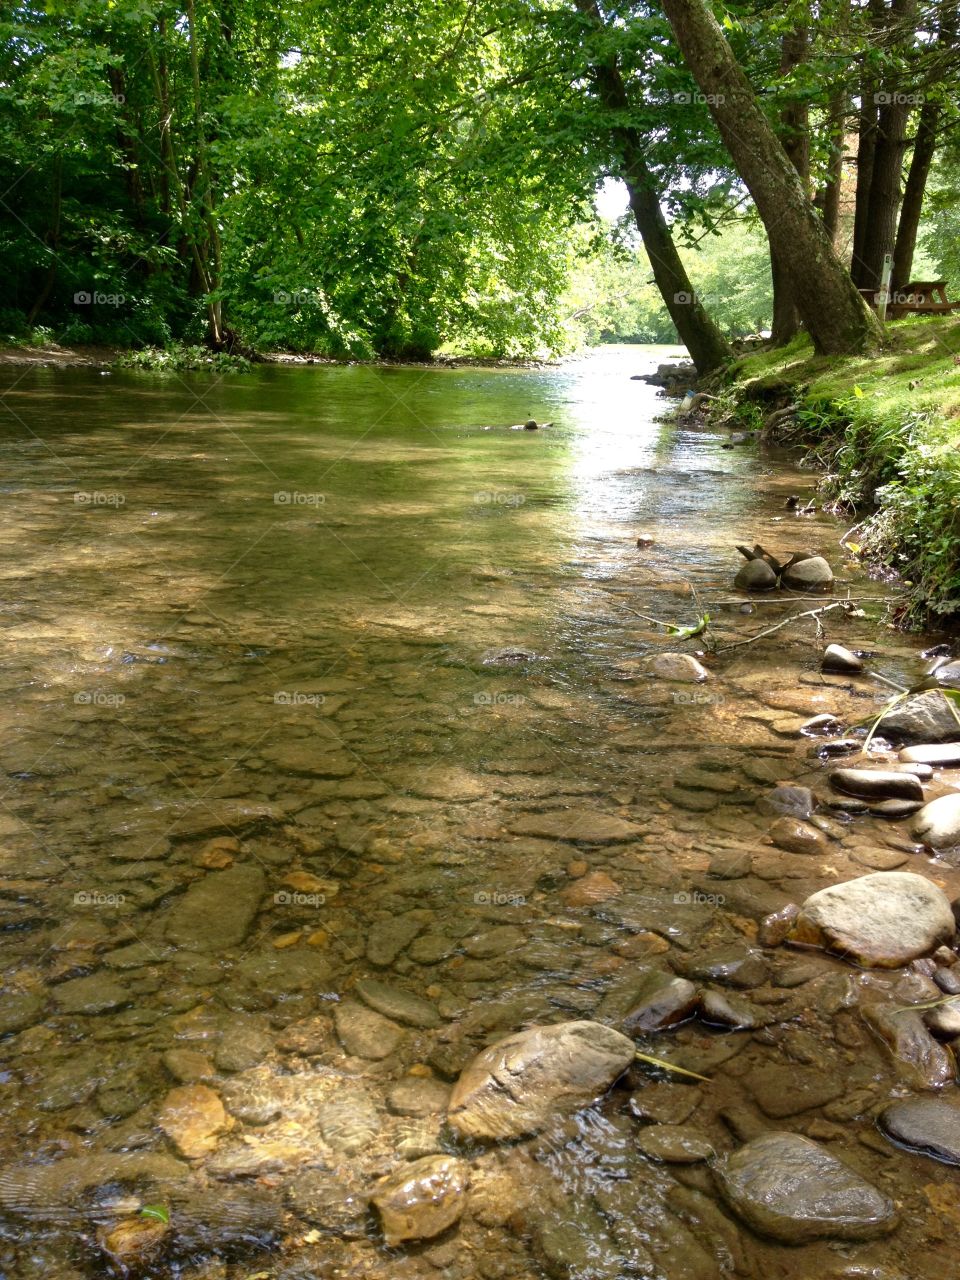 A Walk in the Creek